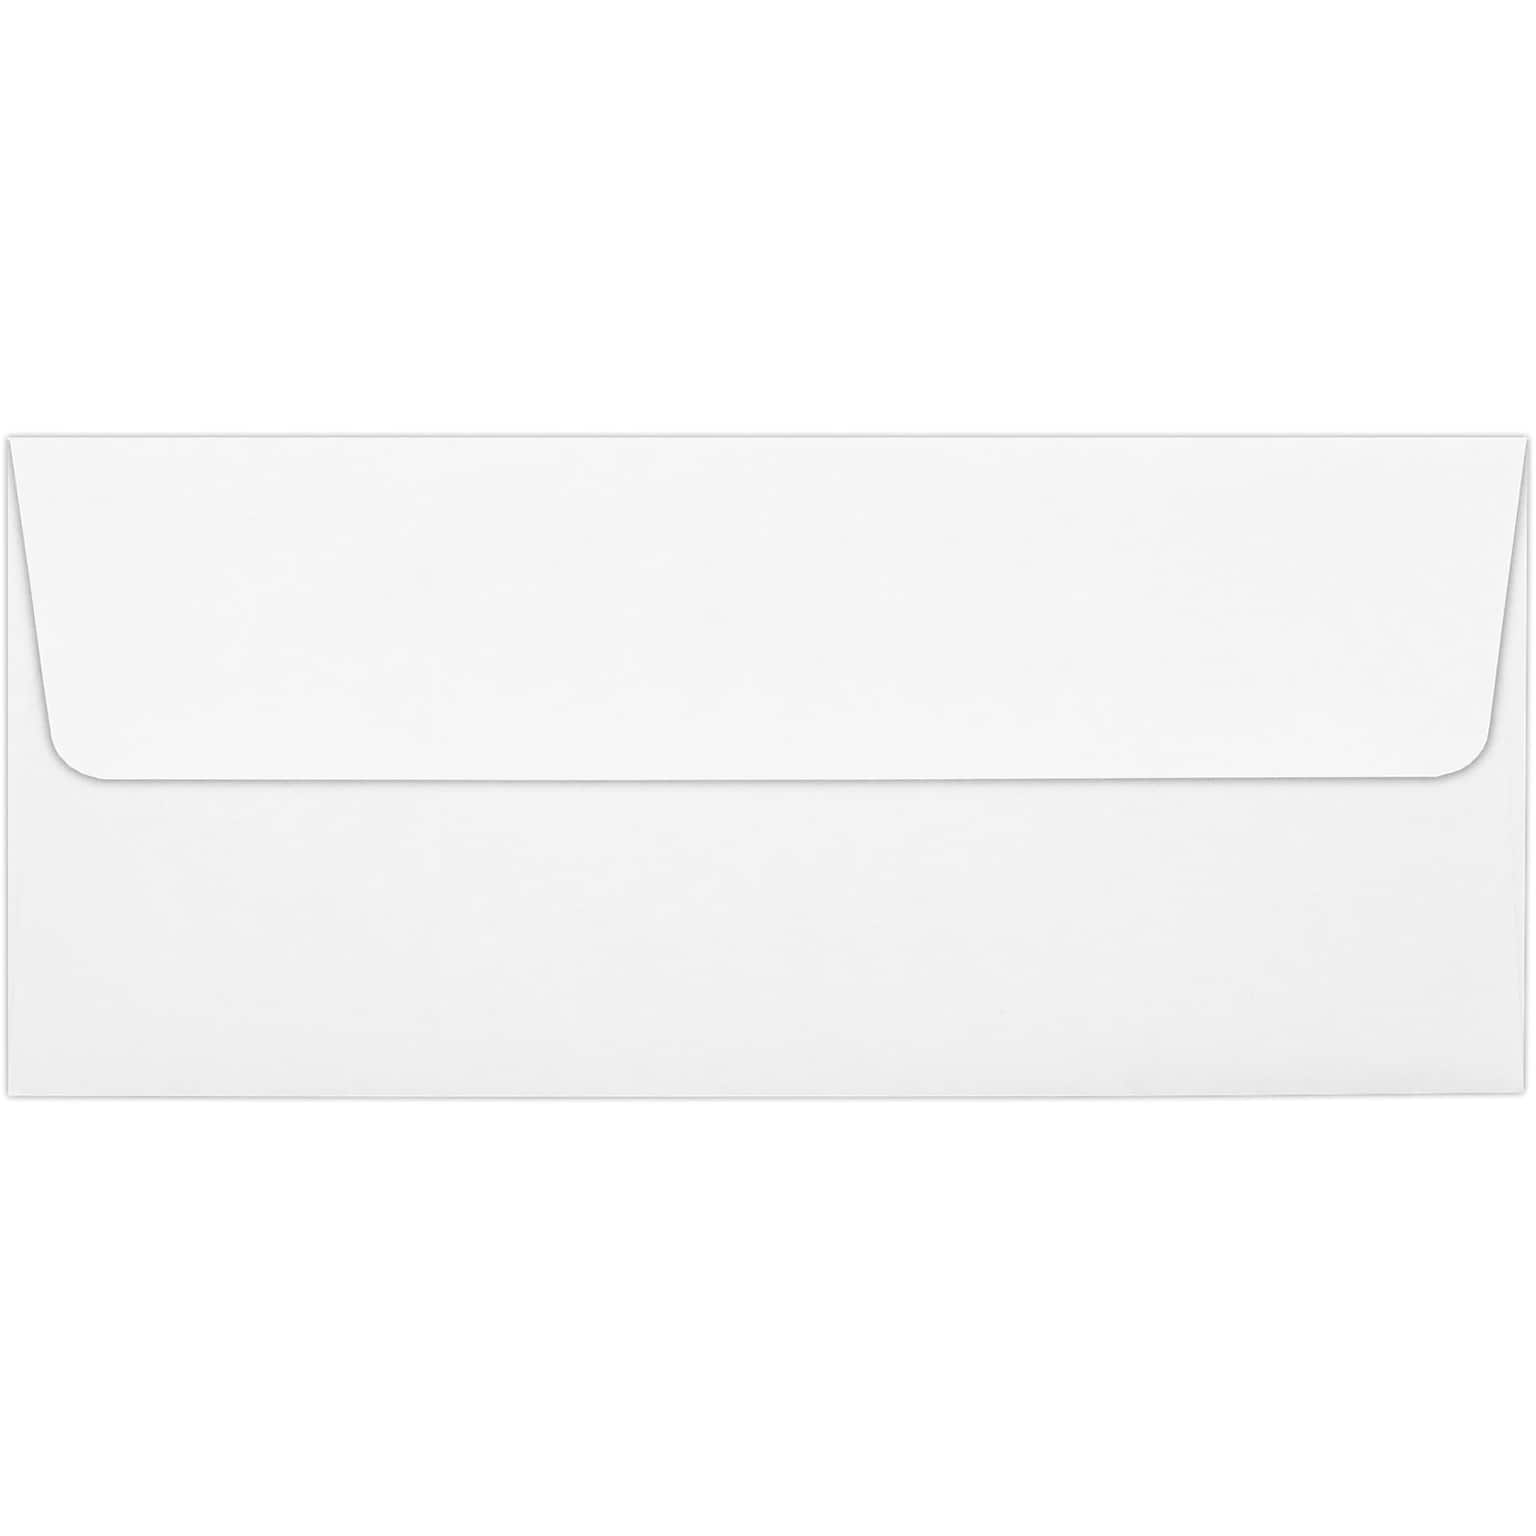 LUX® 80lbs. 4 1/8 x 9 1/2 #10 Square Flap Envelopes, White, 250/BX